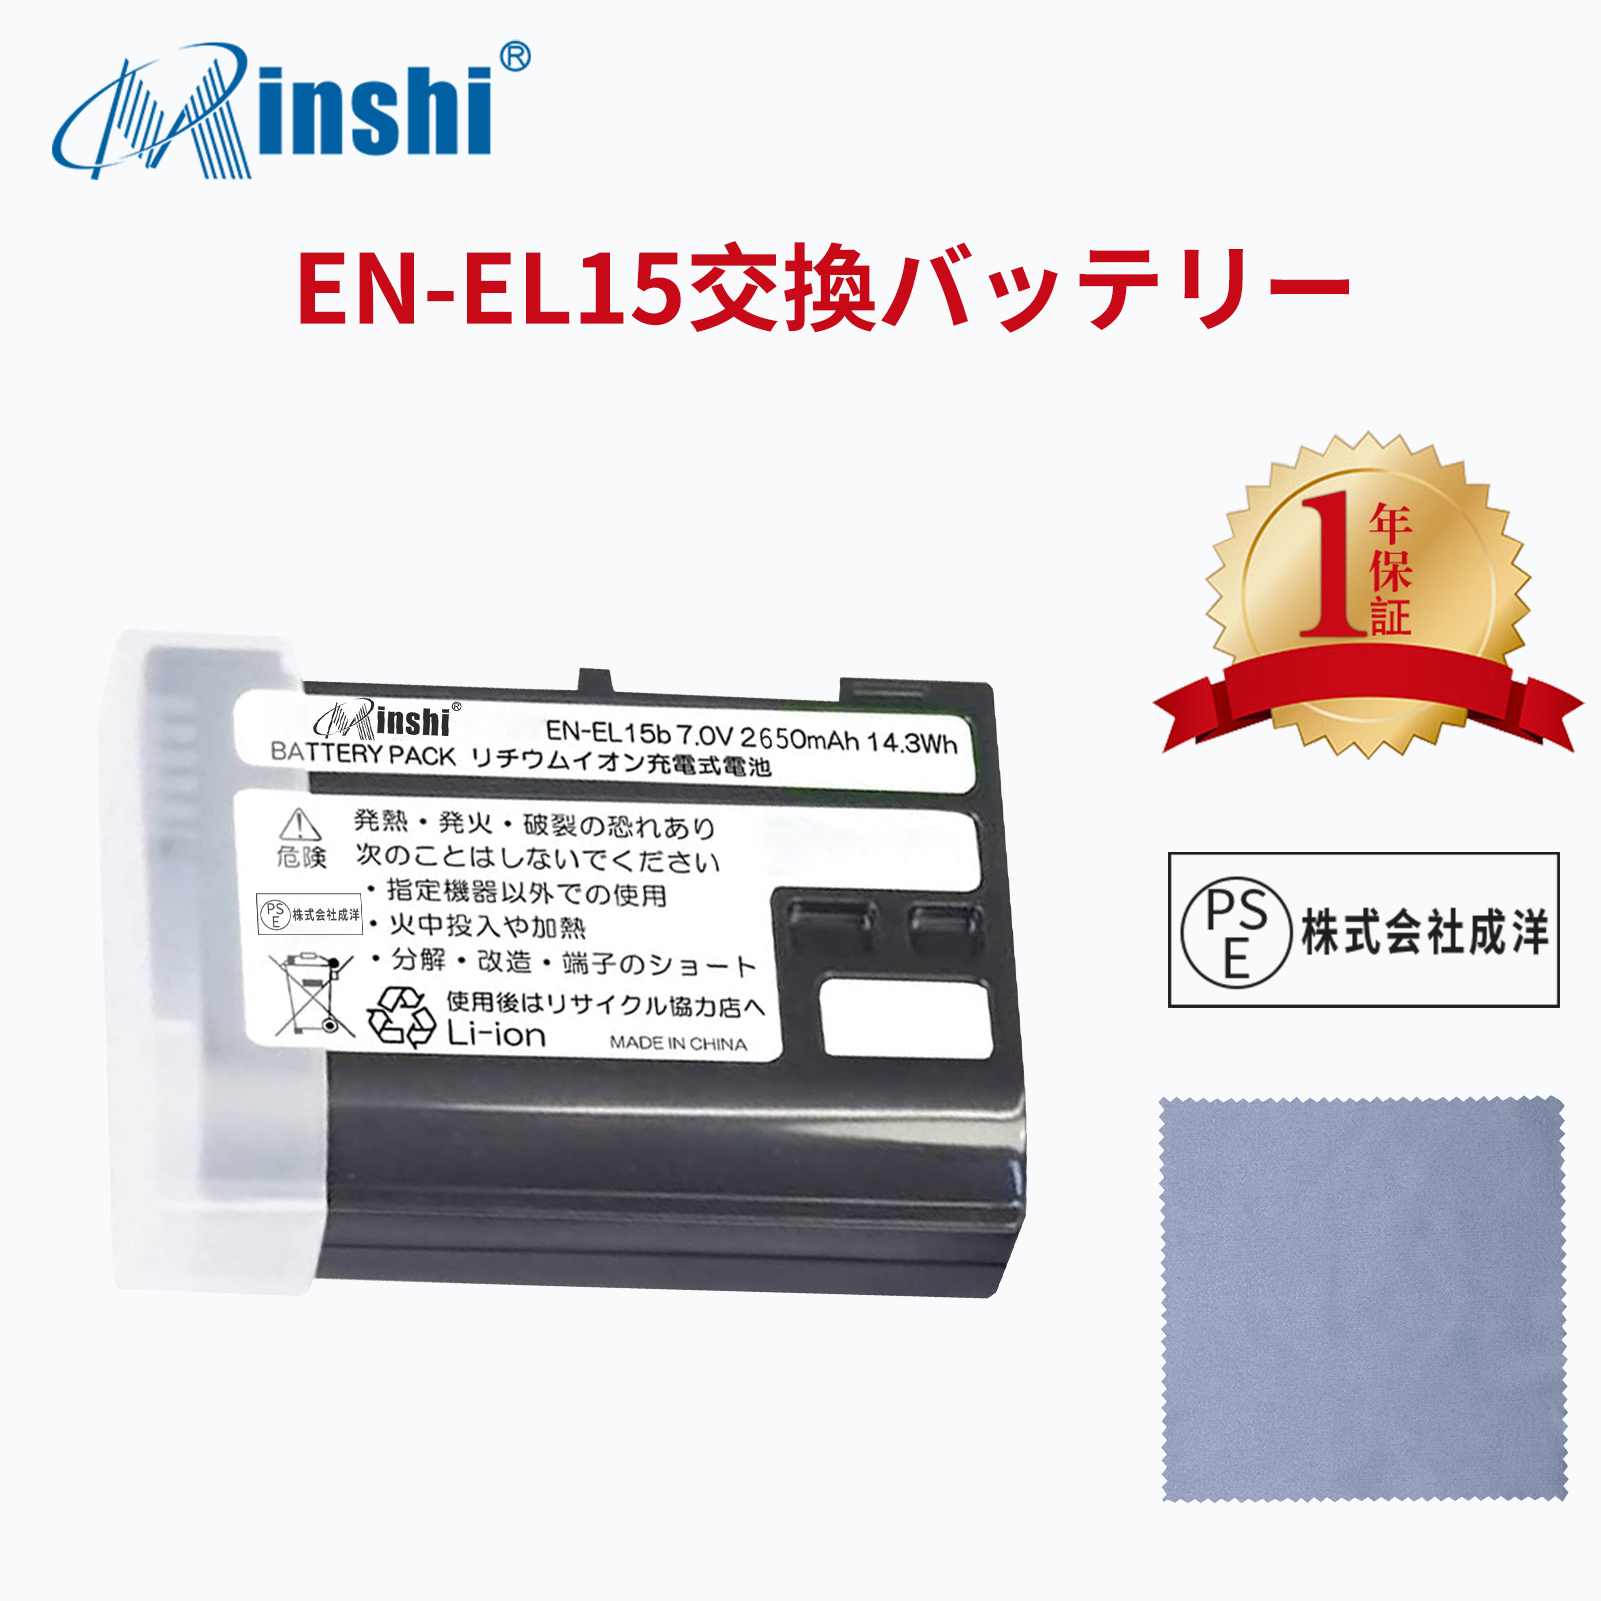 【清潔布ー付】minshi Nikon D780 EN-EL15 EN-EL15C 【2650mAh 7.0V】 PSE認定済 高品質EN-EL15EN-EL15  EN-EL15C互換バッテリーPHB